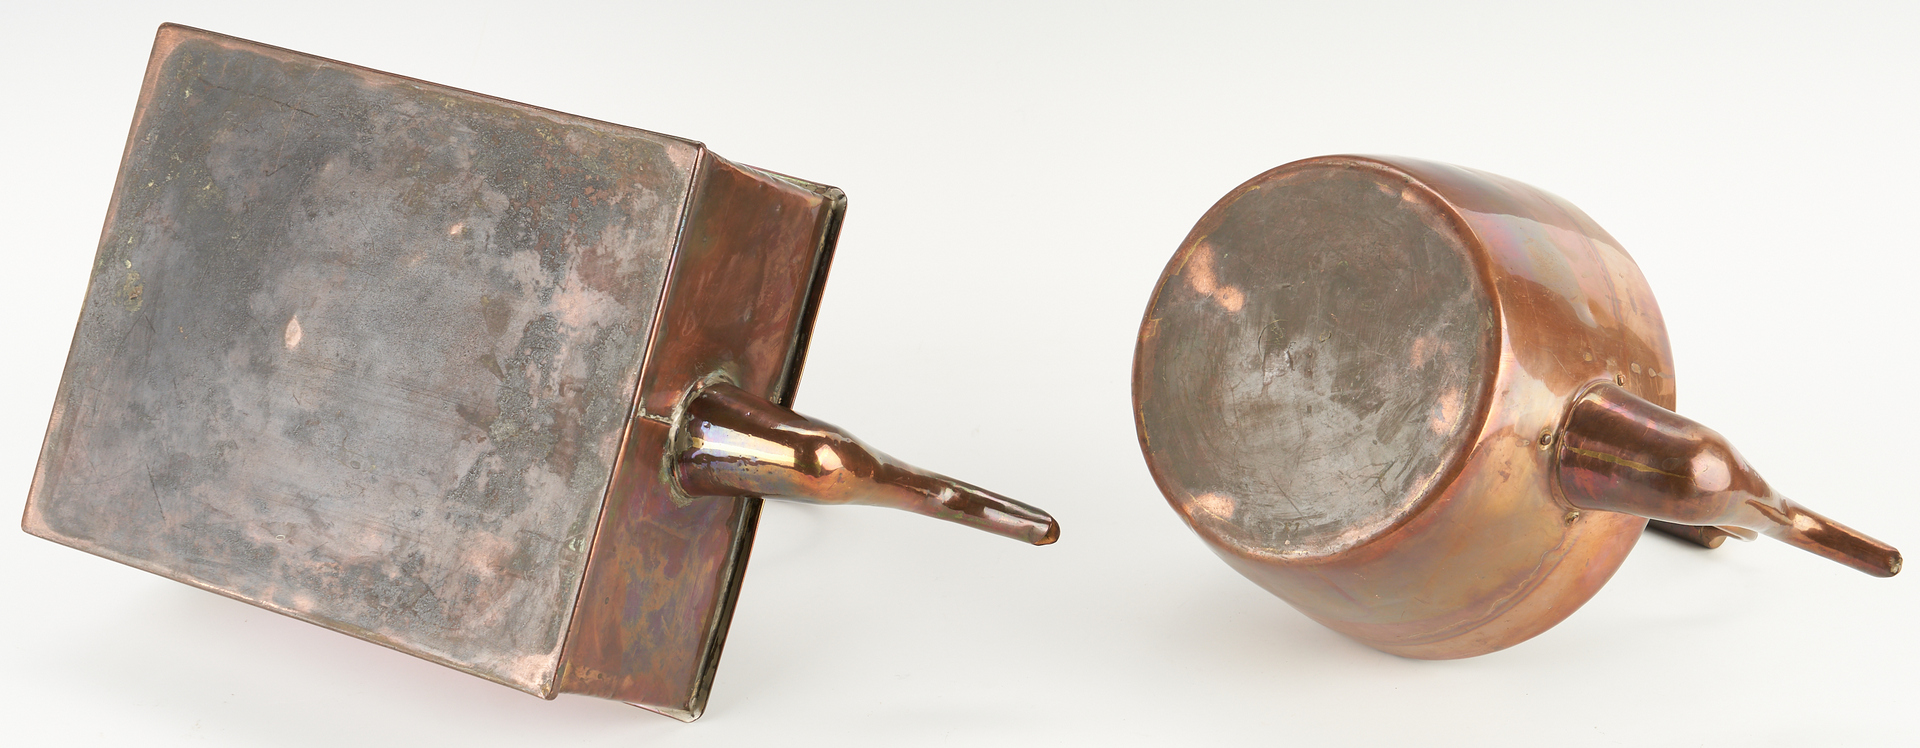 Lot 1046: 2 Copper Kettles & Stands, Charles K. Davis Collection